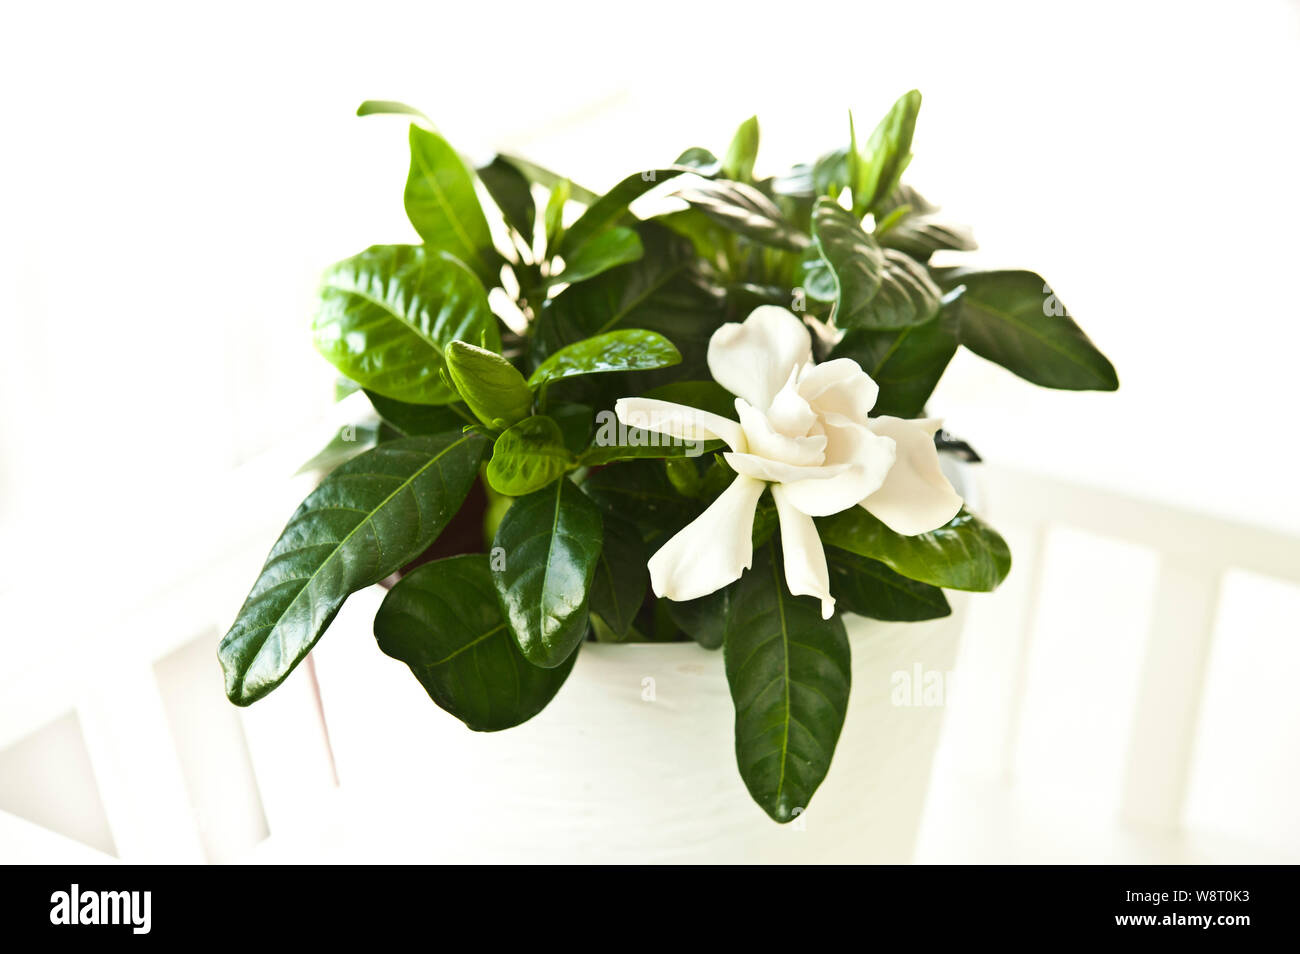 Gardenia Jasminoides flowering plant in vase with white flowers blooming Stock Photo